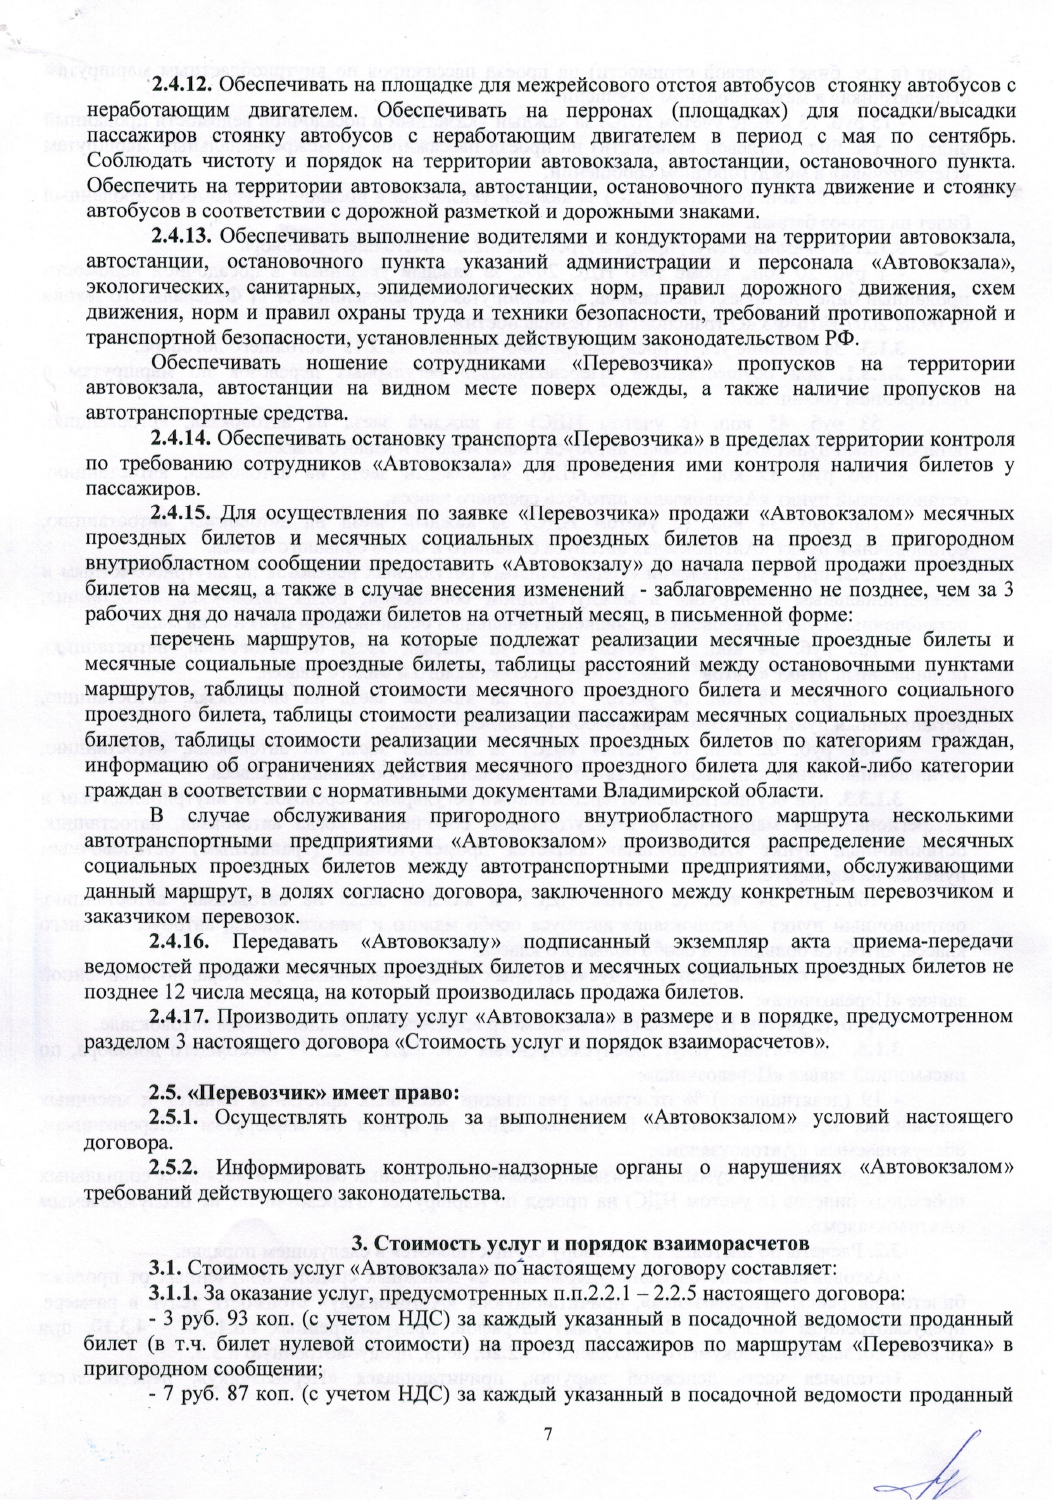 Договор ГУП владимиский вокзал-7.jpg